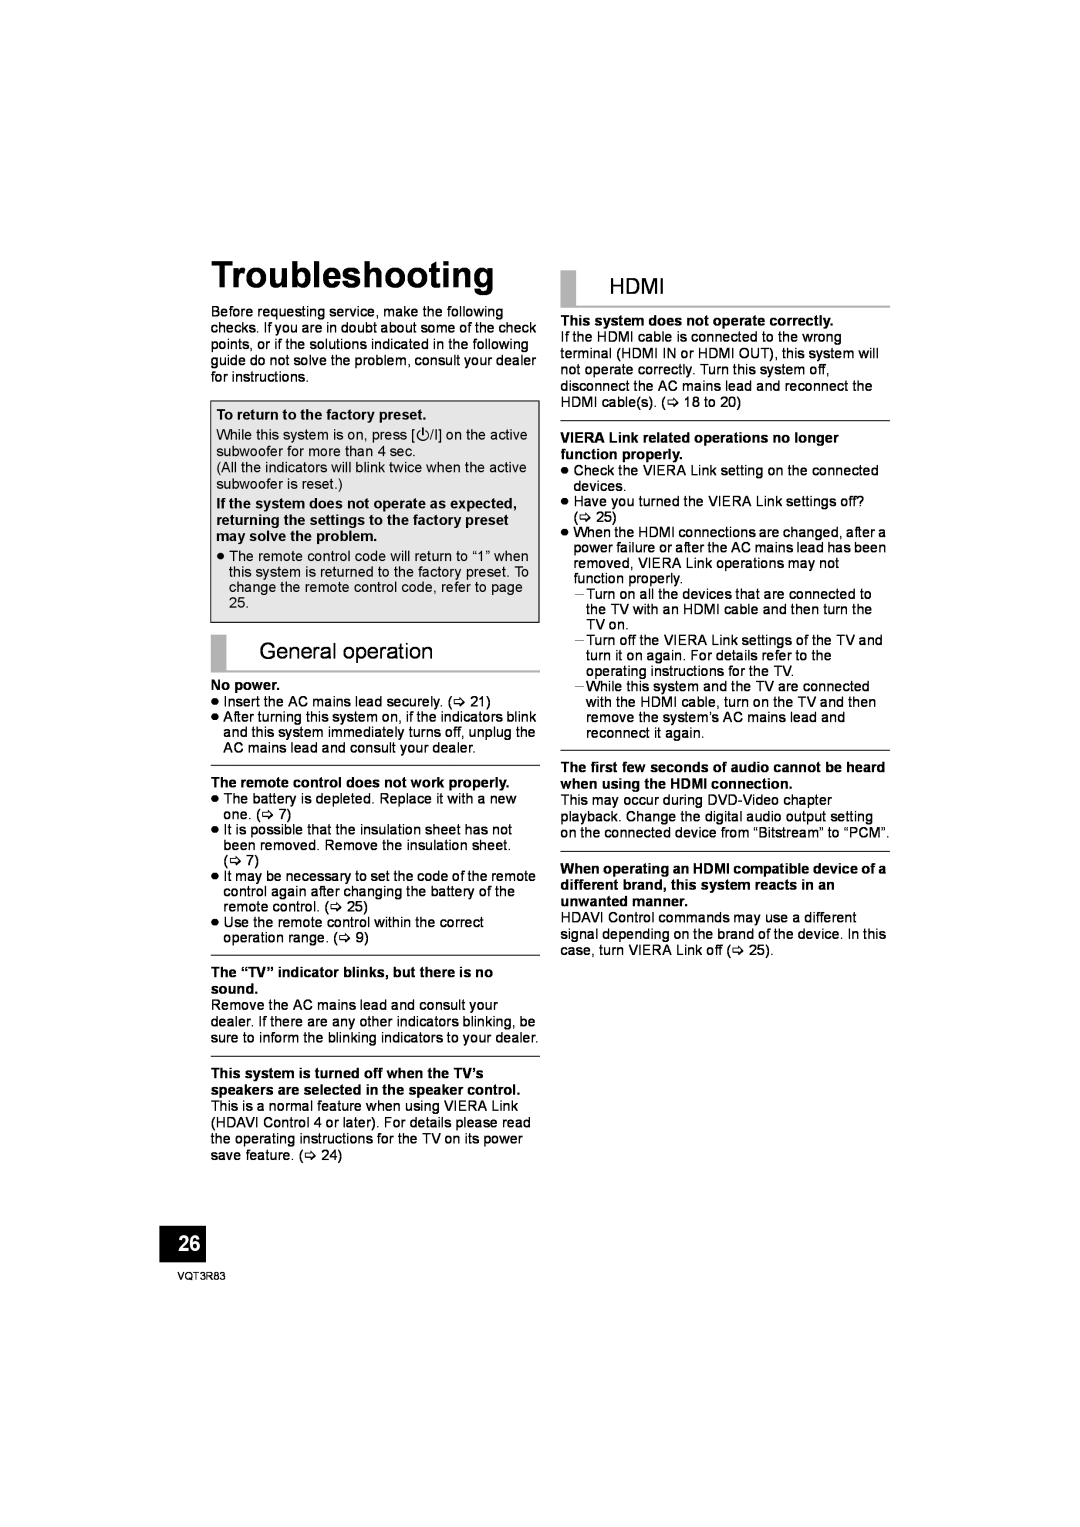 Panasonic SC-HTB15 operating instructions Troubleshooting, General operation, Hdmi 